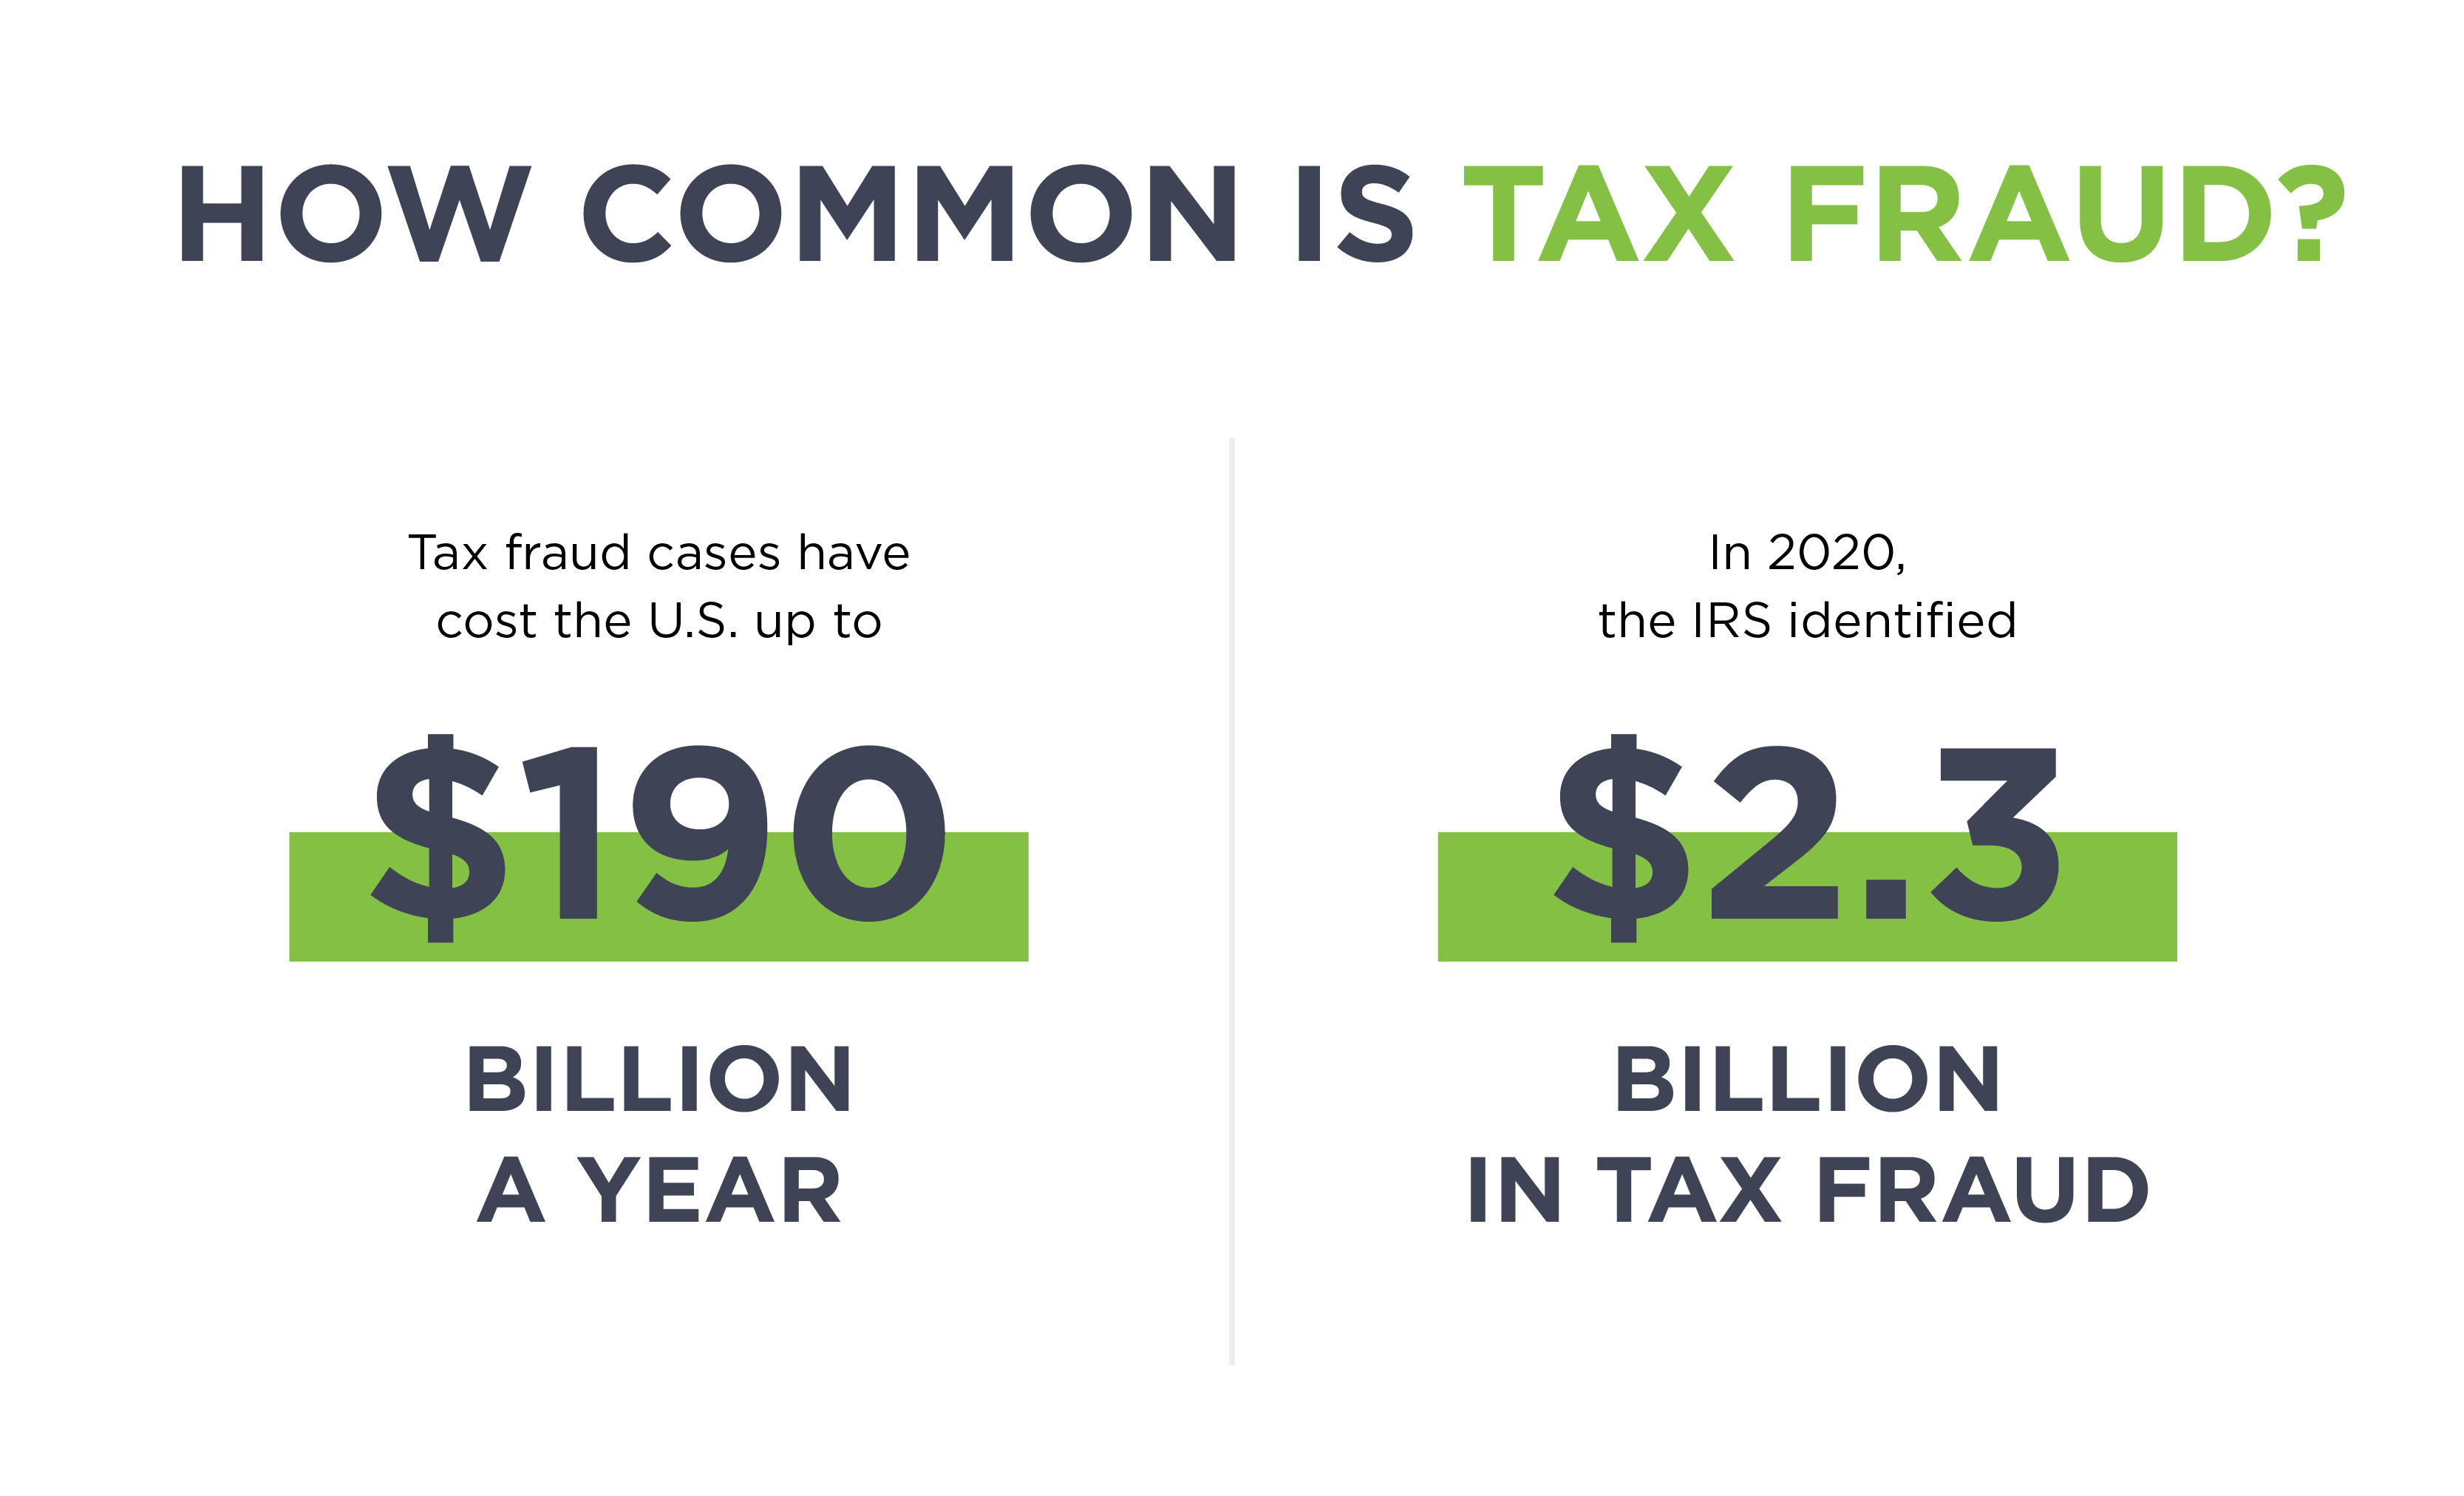 Statistics showing tax fraud costs billions of dollars in US.